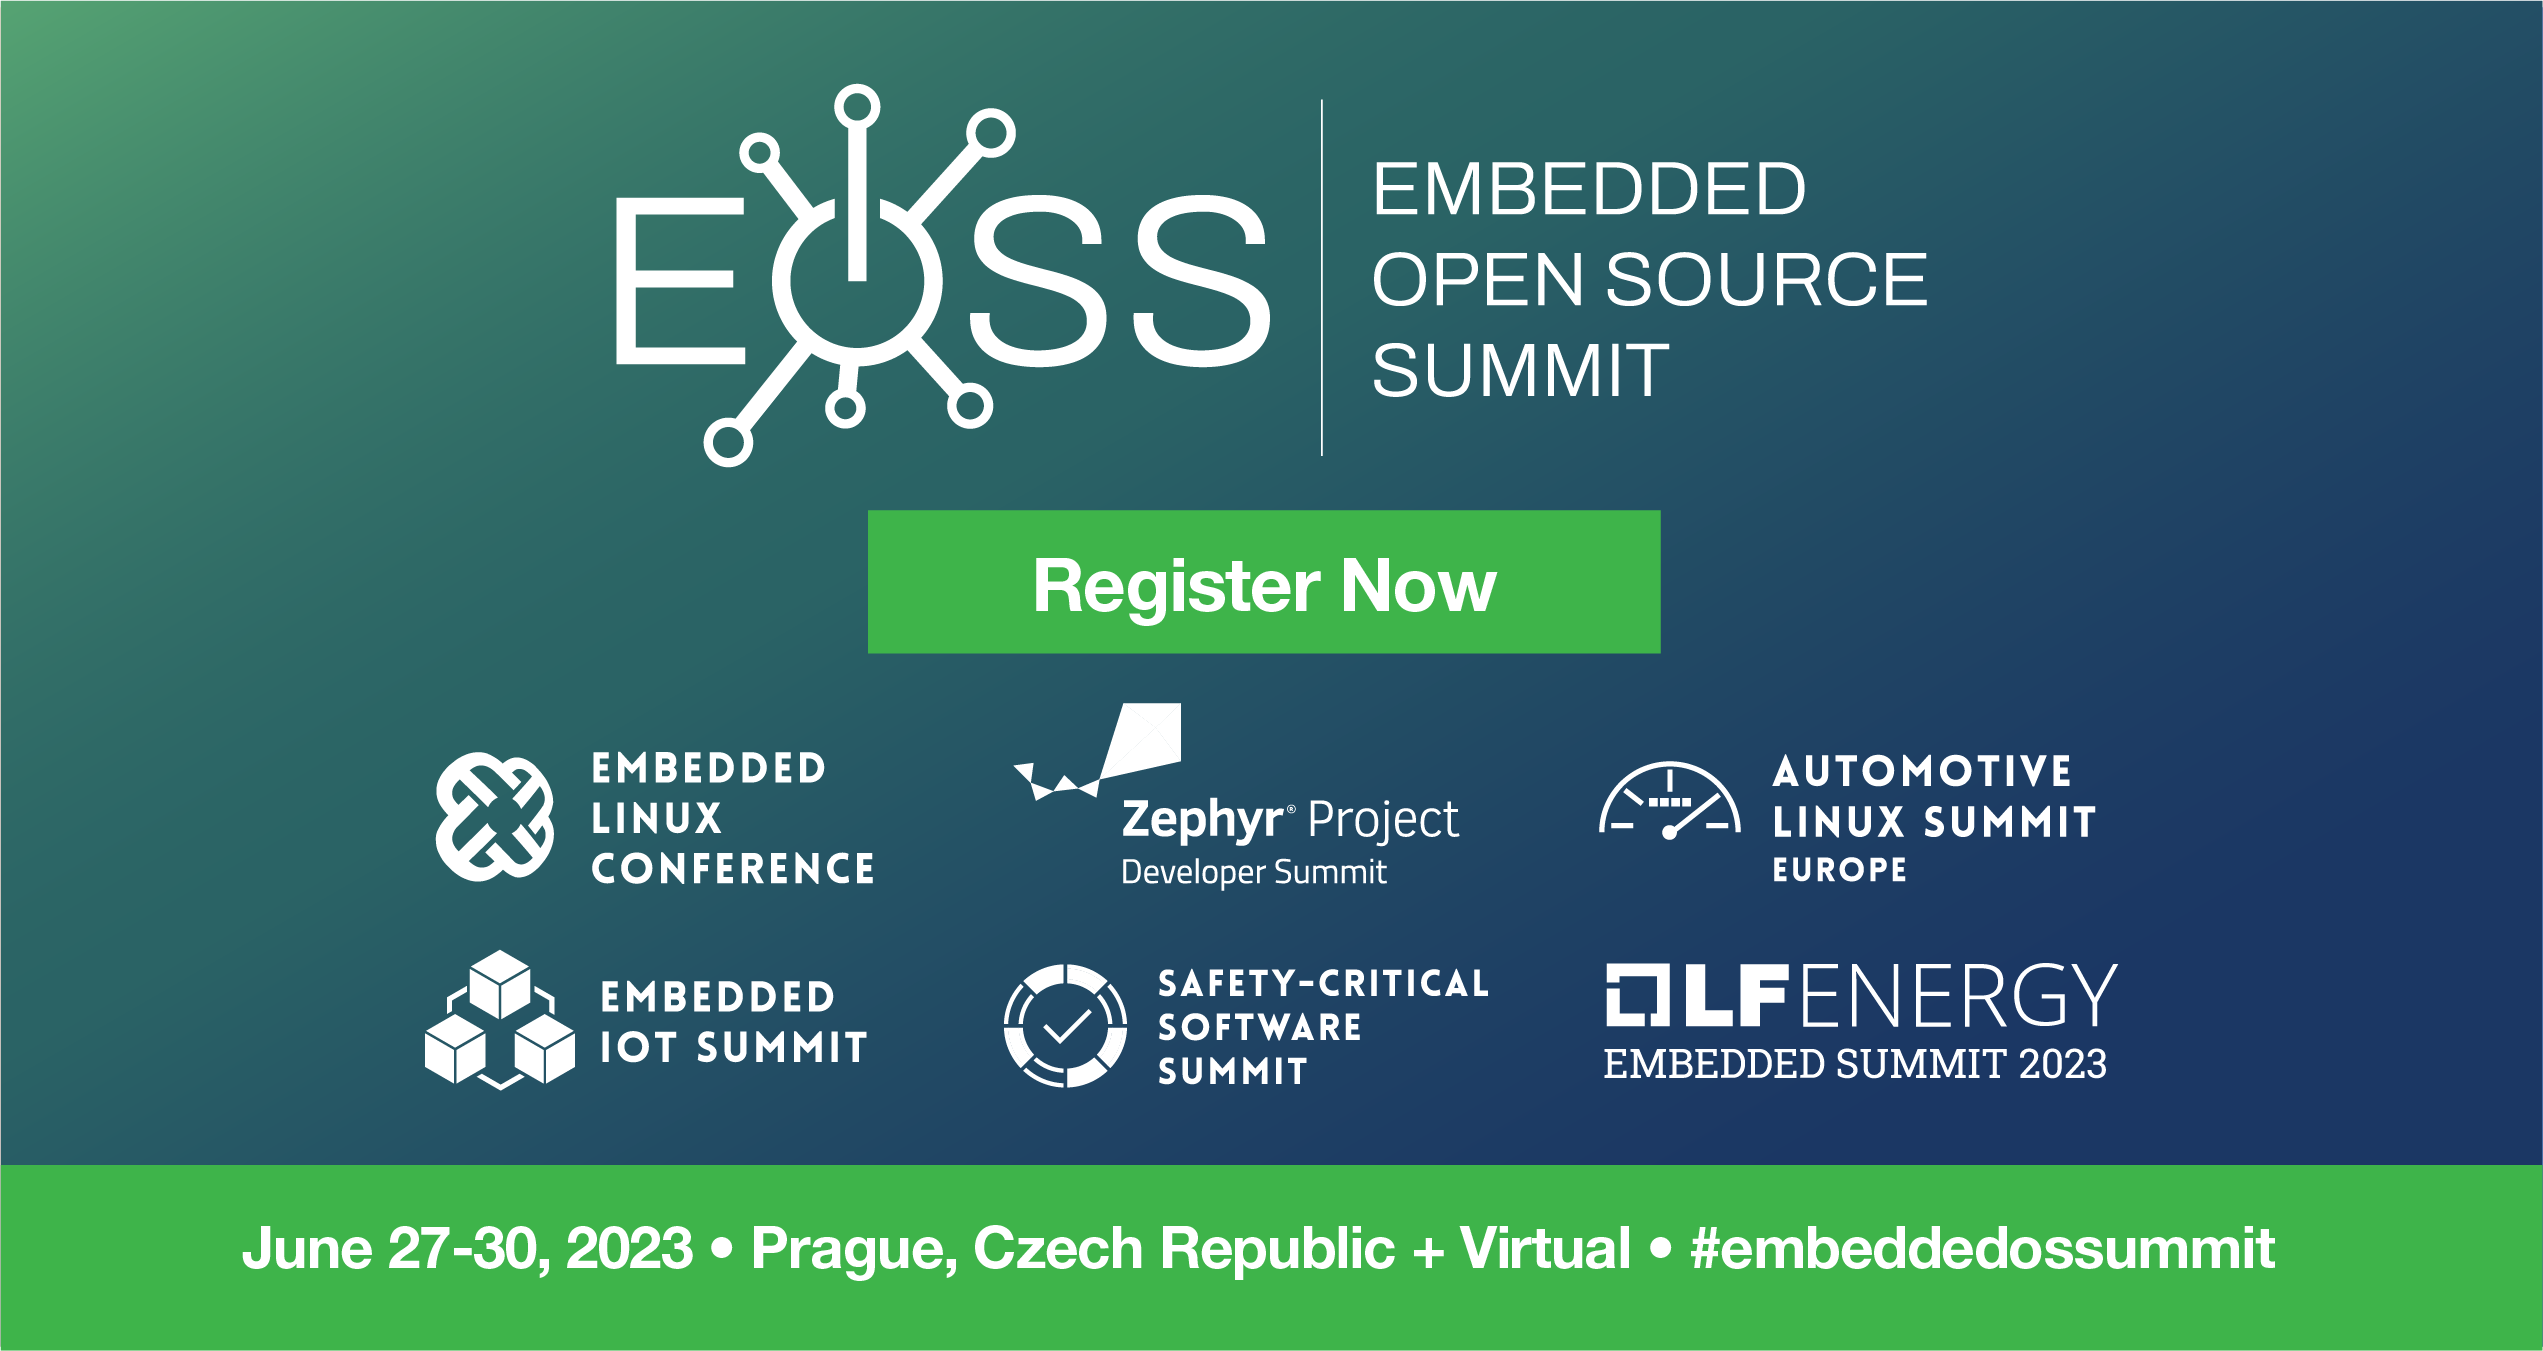 Register now for Embedded Open Source Summit, June 27-30 in Prague, Czech Republic.